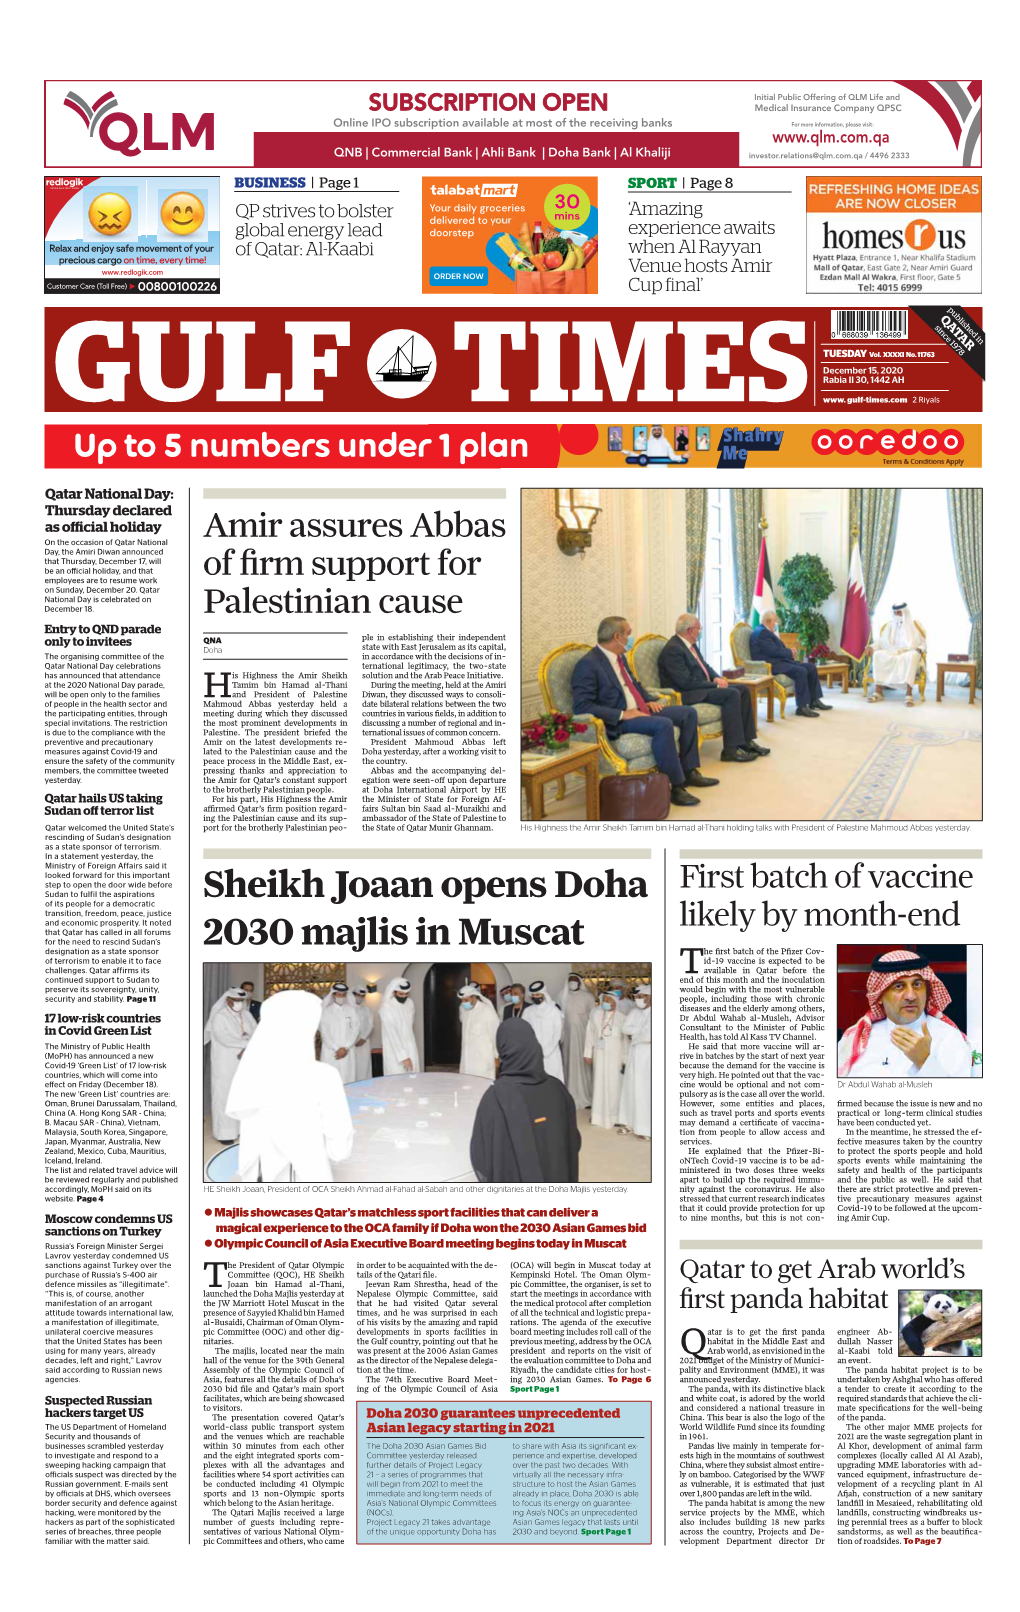 Sheikh Joaan Opens Doha 2030 Majlis in Muscat